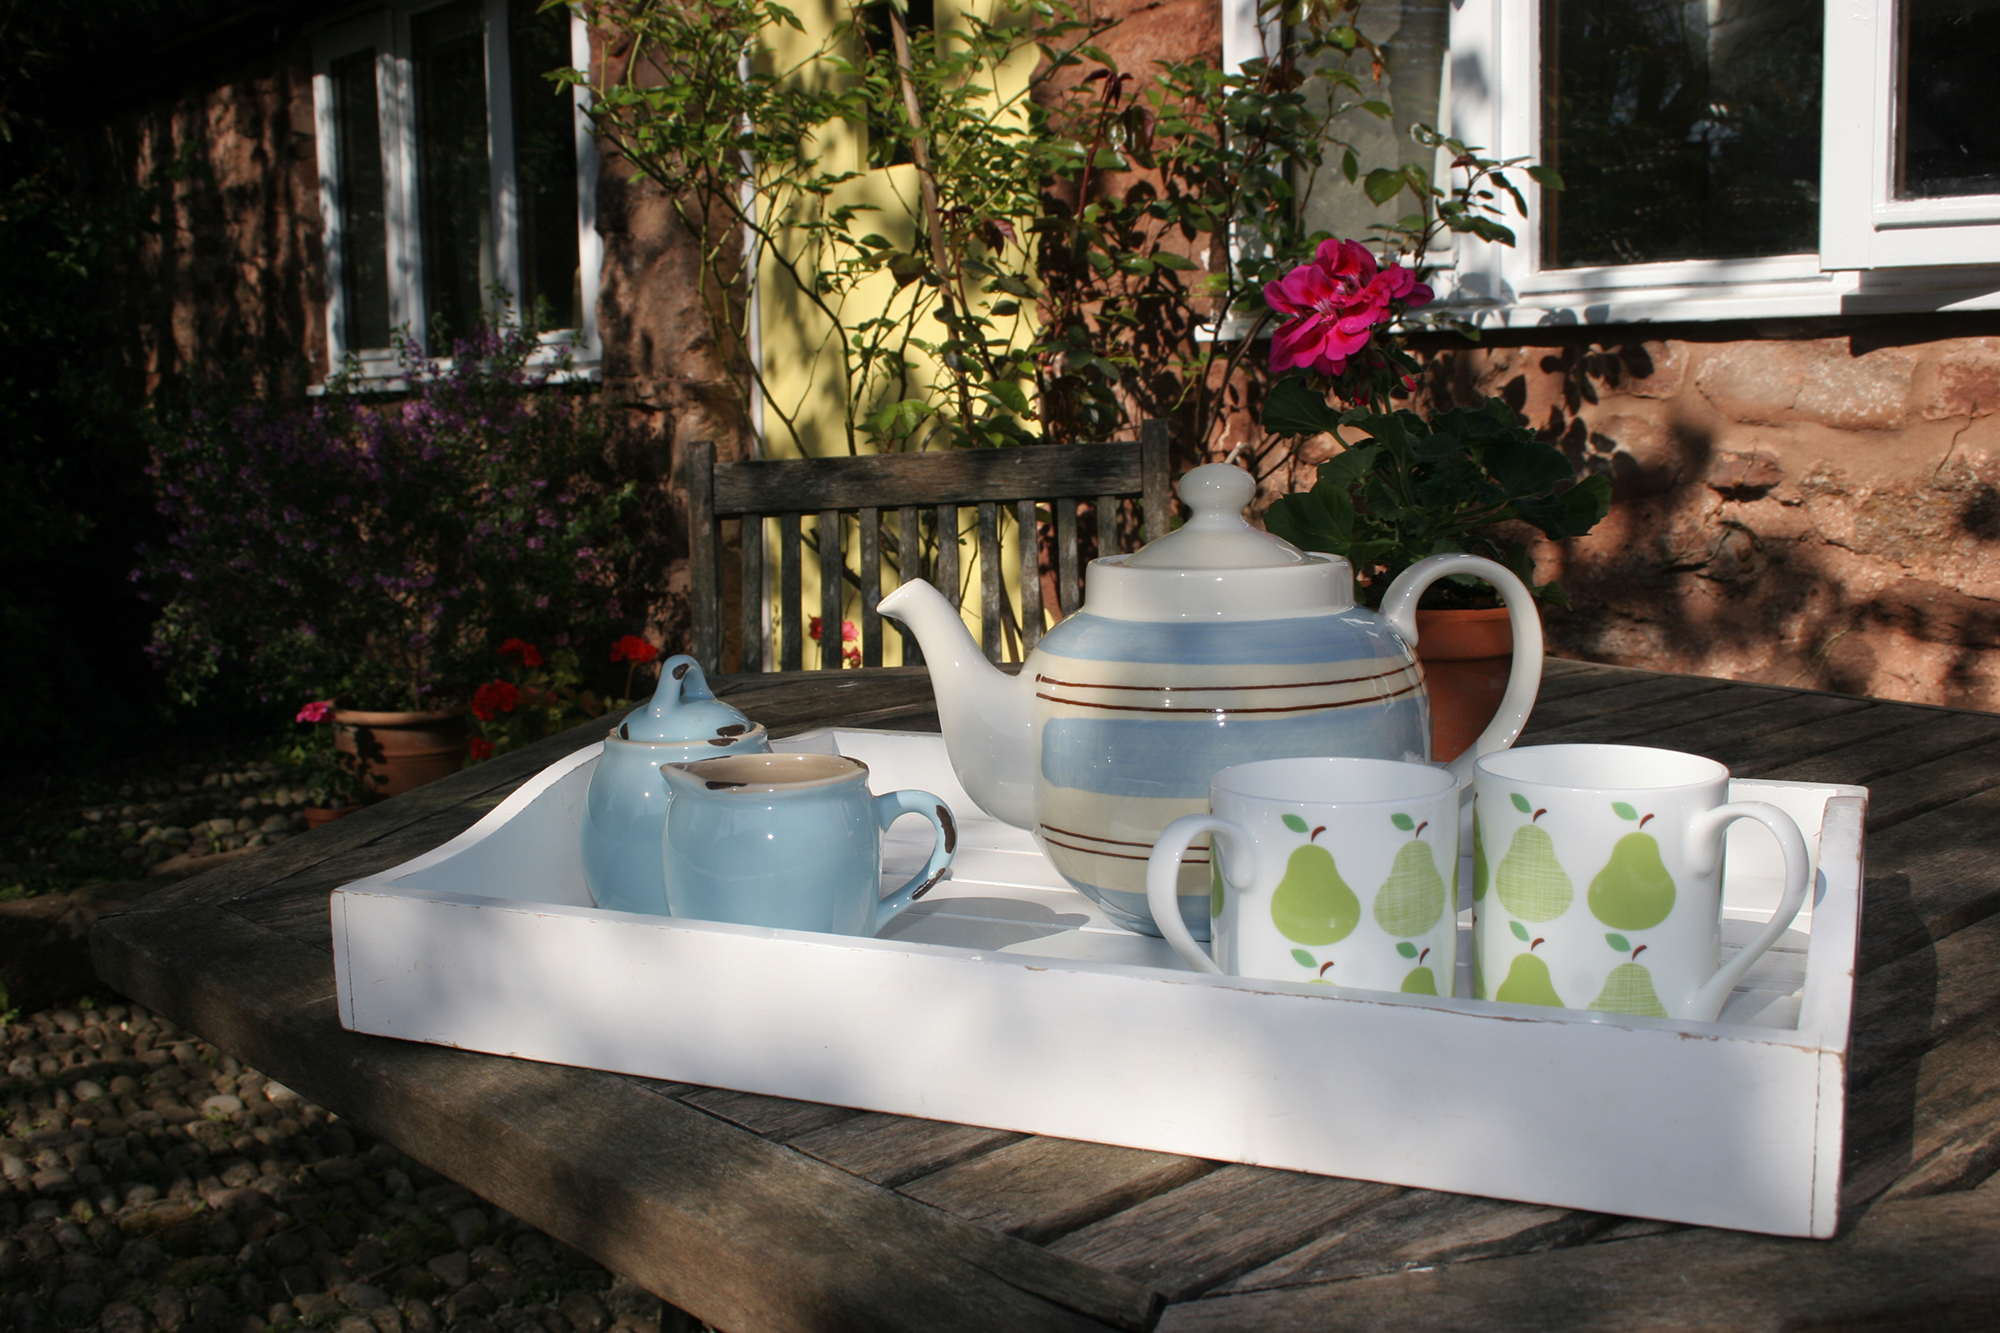 Enjoy tea in the garden